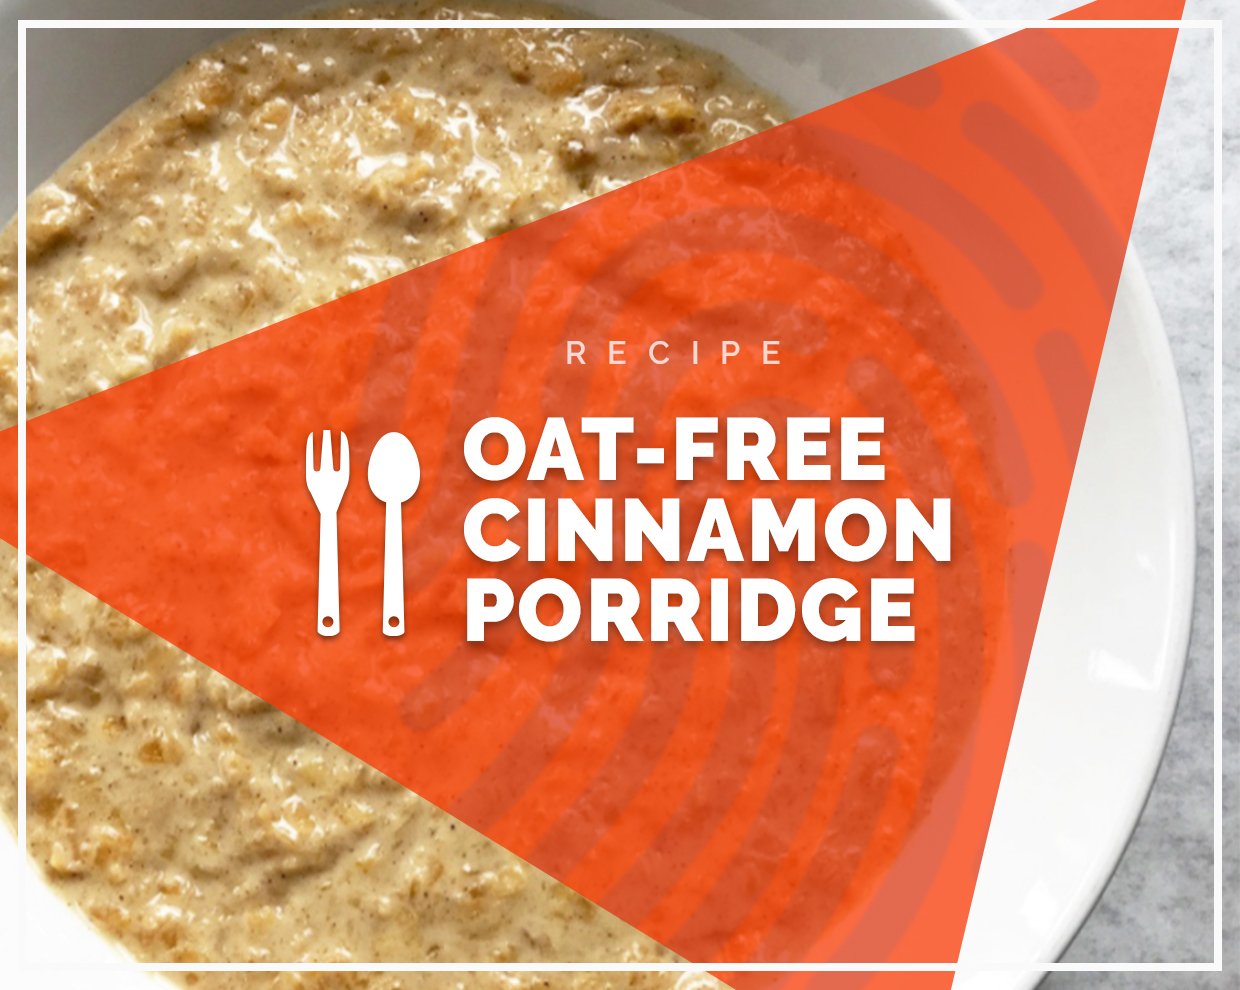 Oat-free cinnamon porridge 